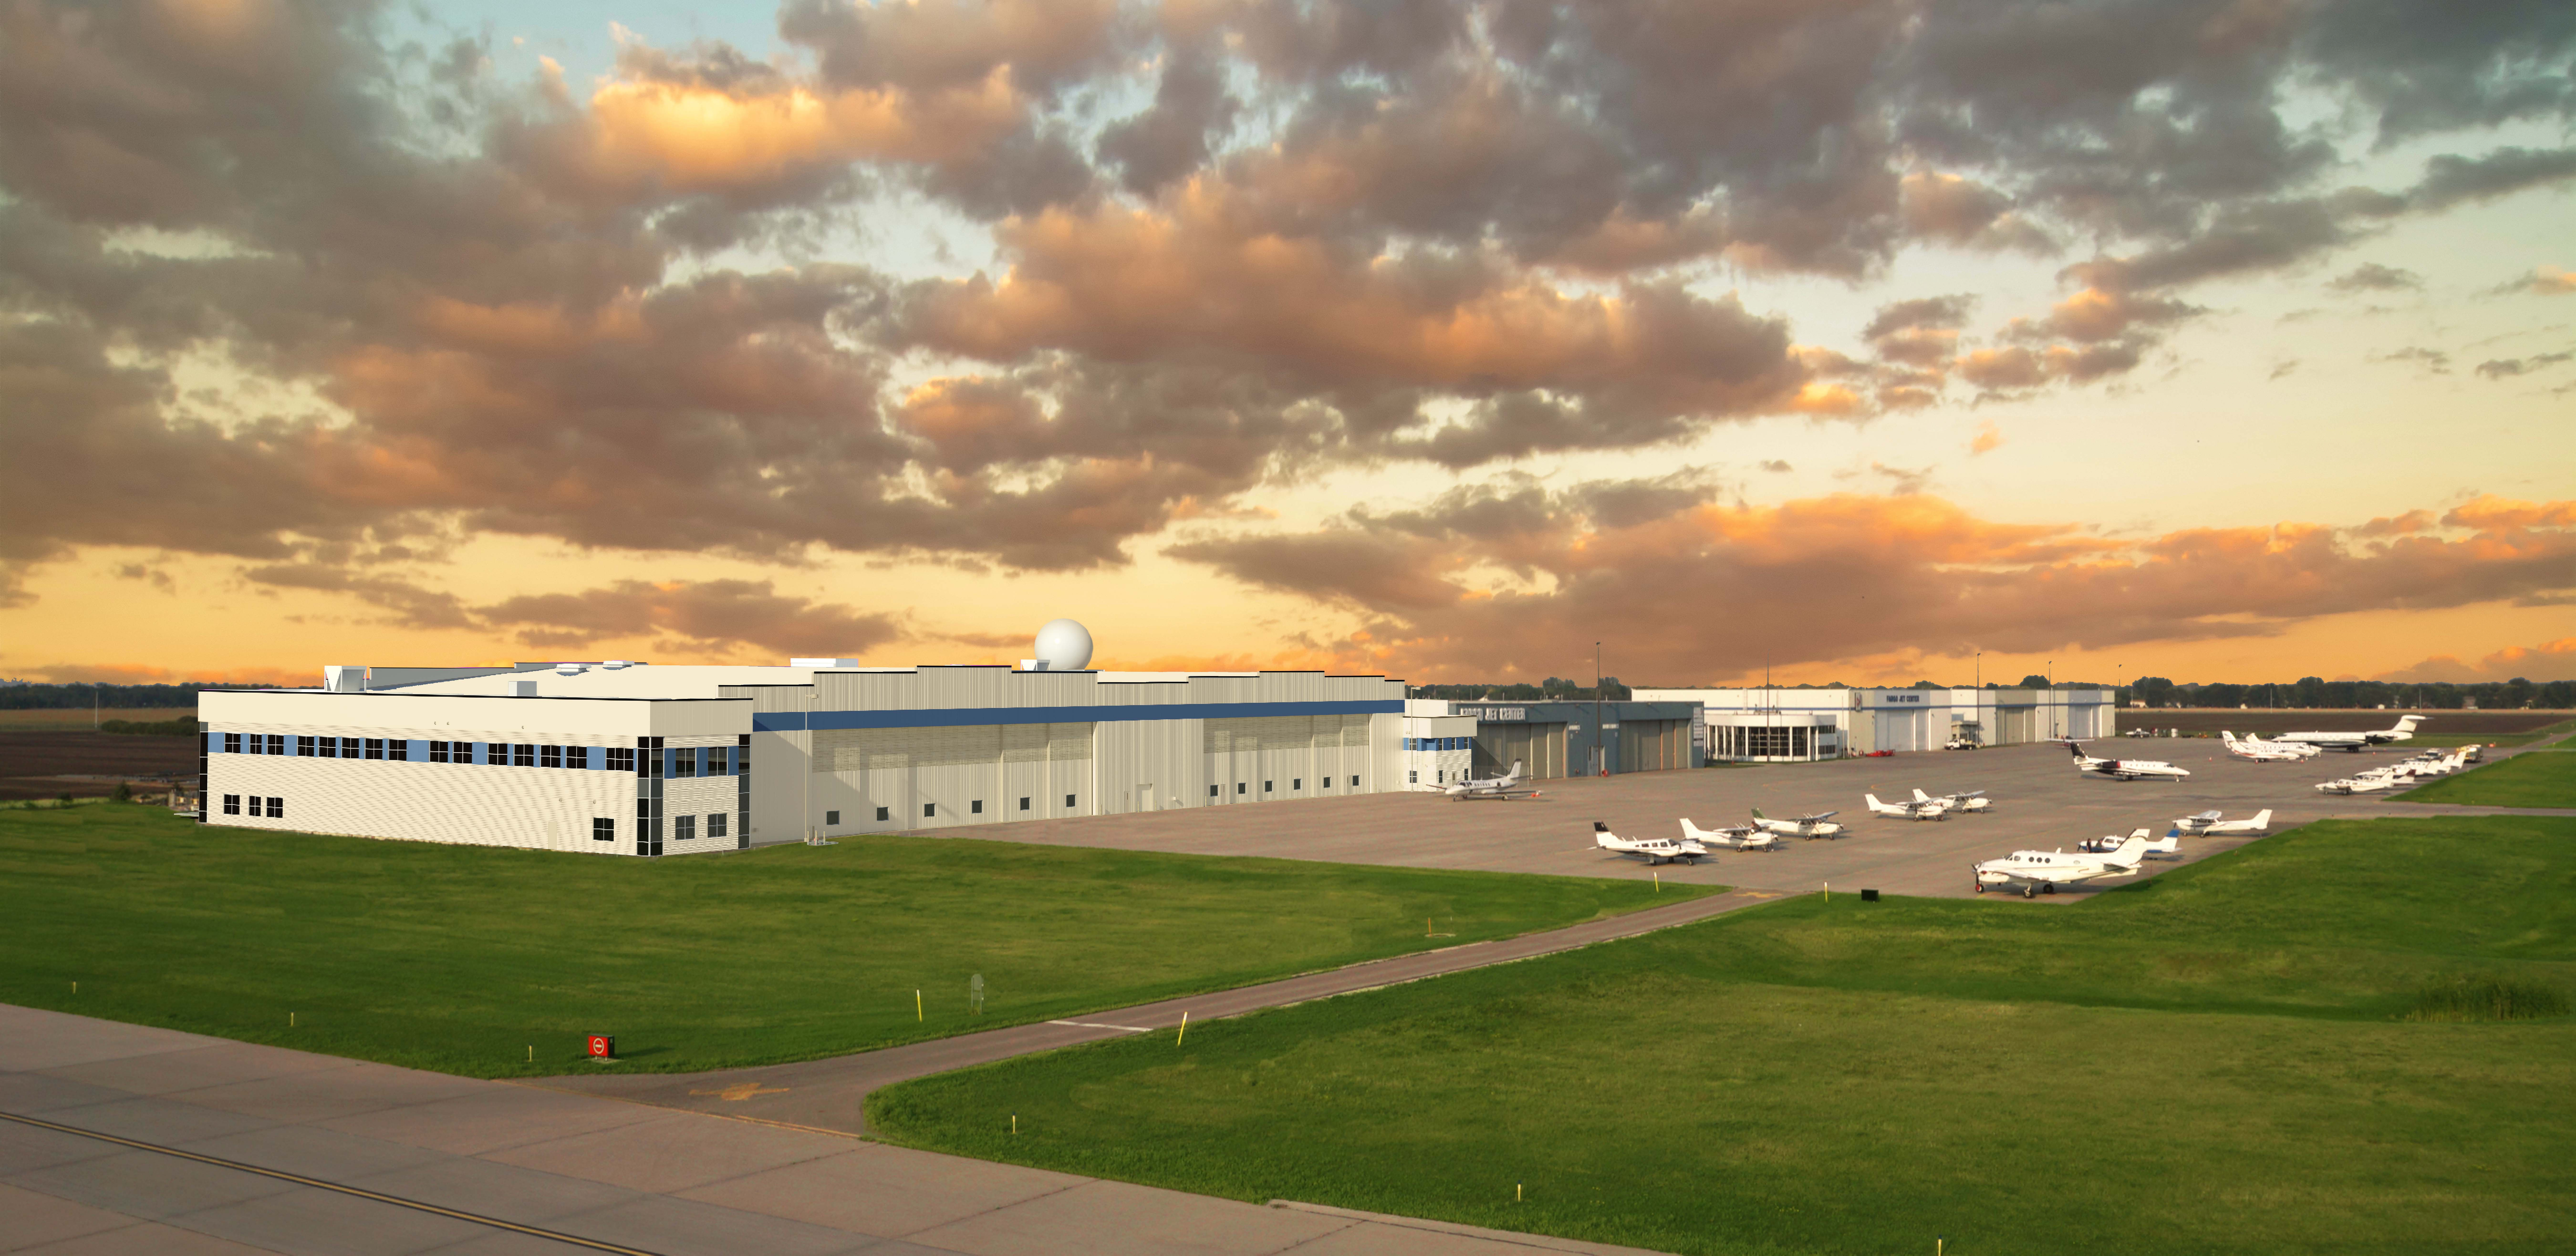 fargo jet center facility expansion